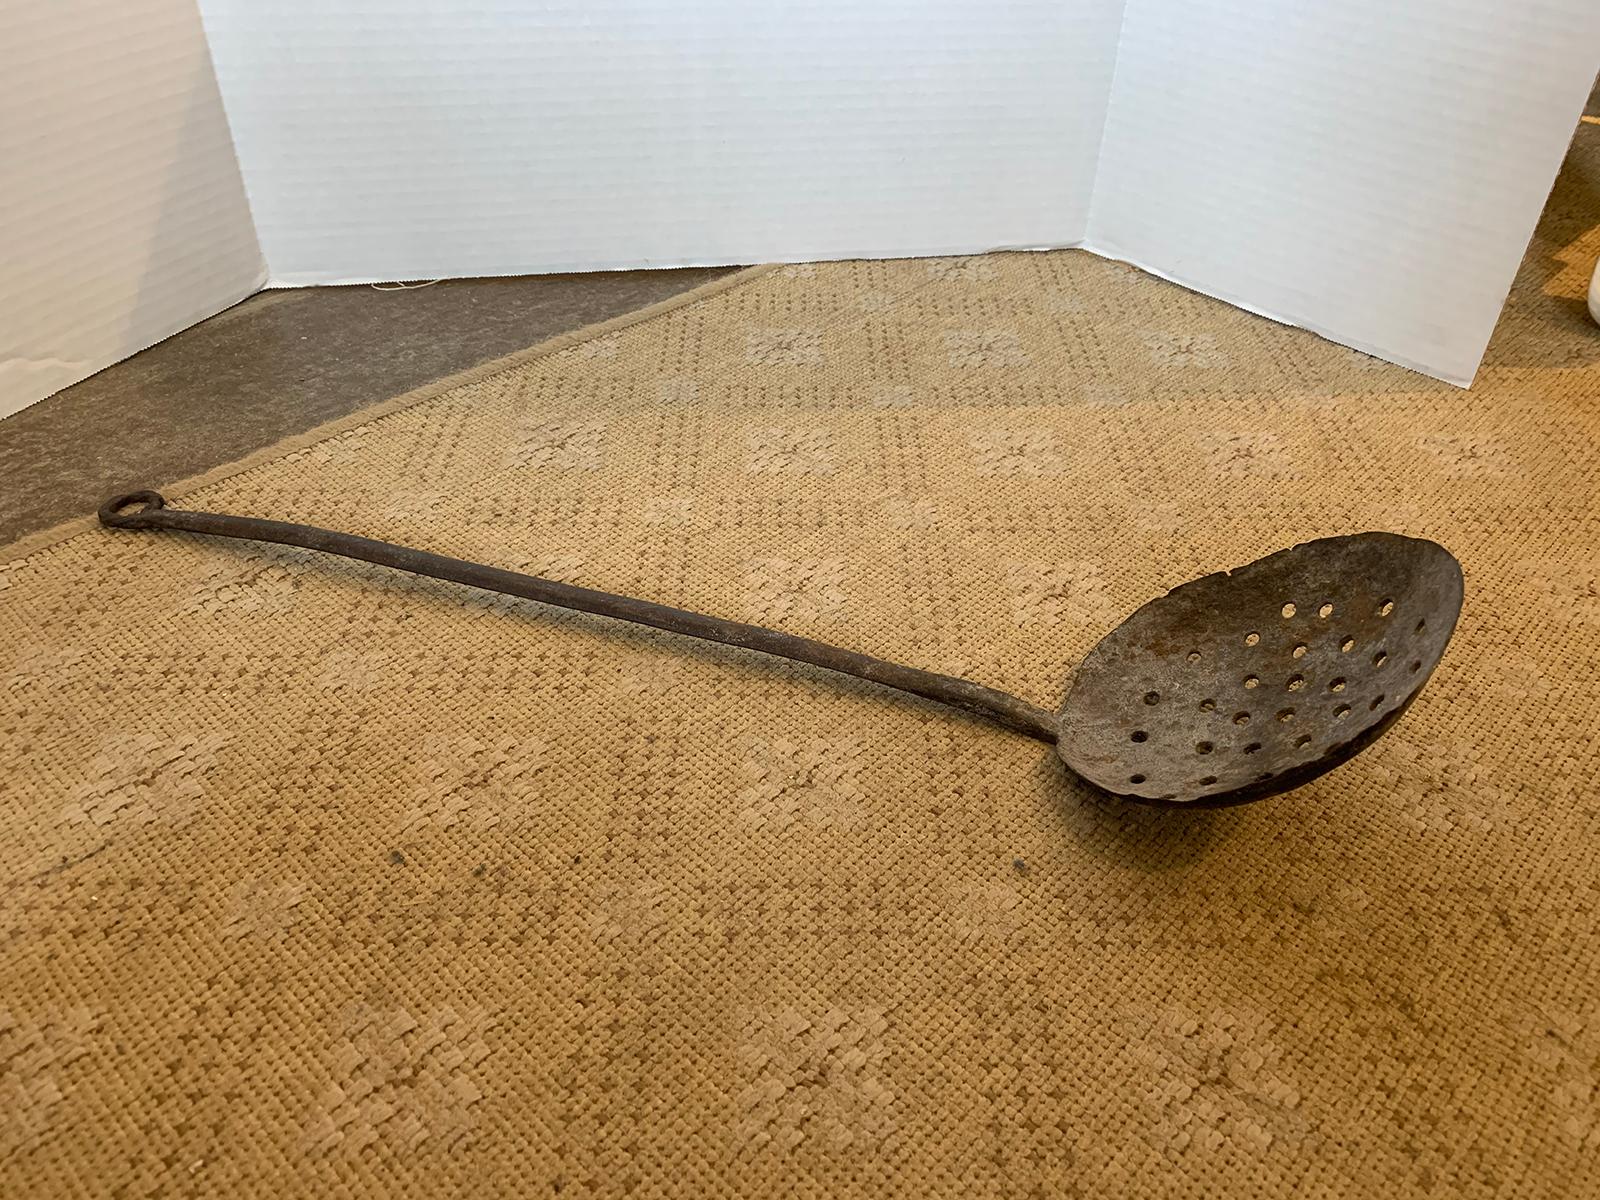 18th-19th Century Iron Tea Strainer Spoon In Good Condition For Sale In Atlanta, GA